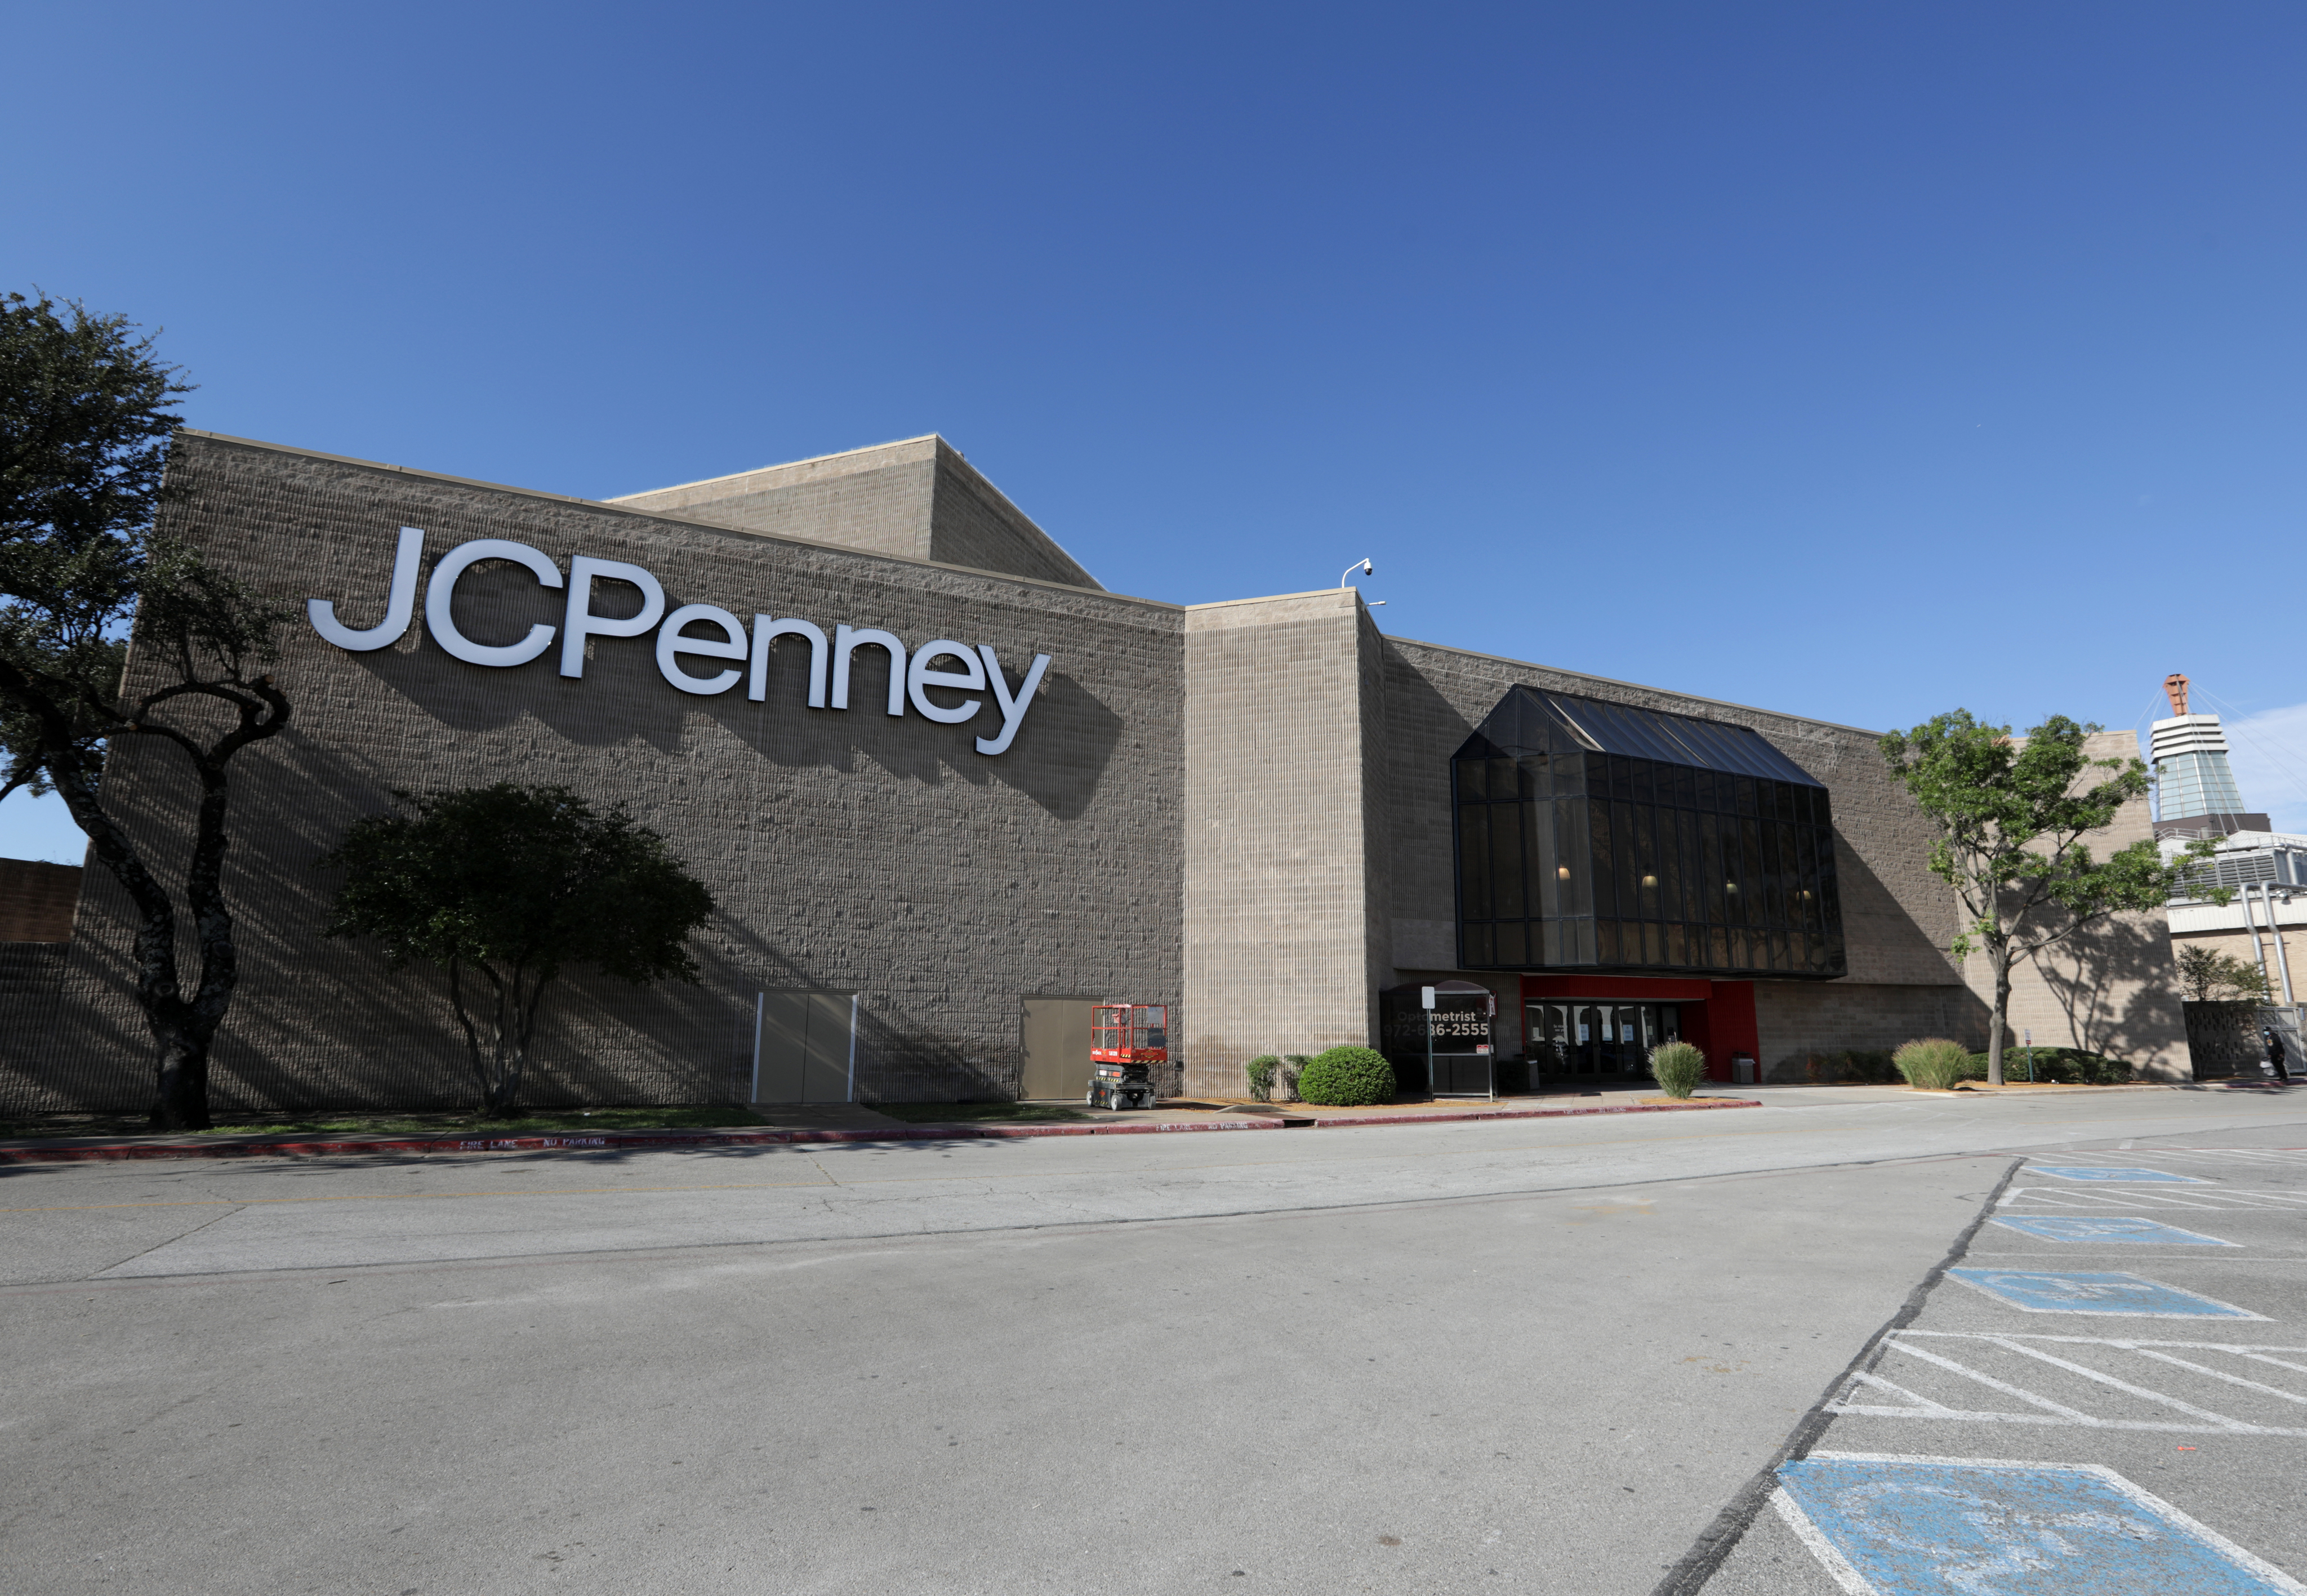 JCPenney spending $1 billion on store, online upgrades in latest